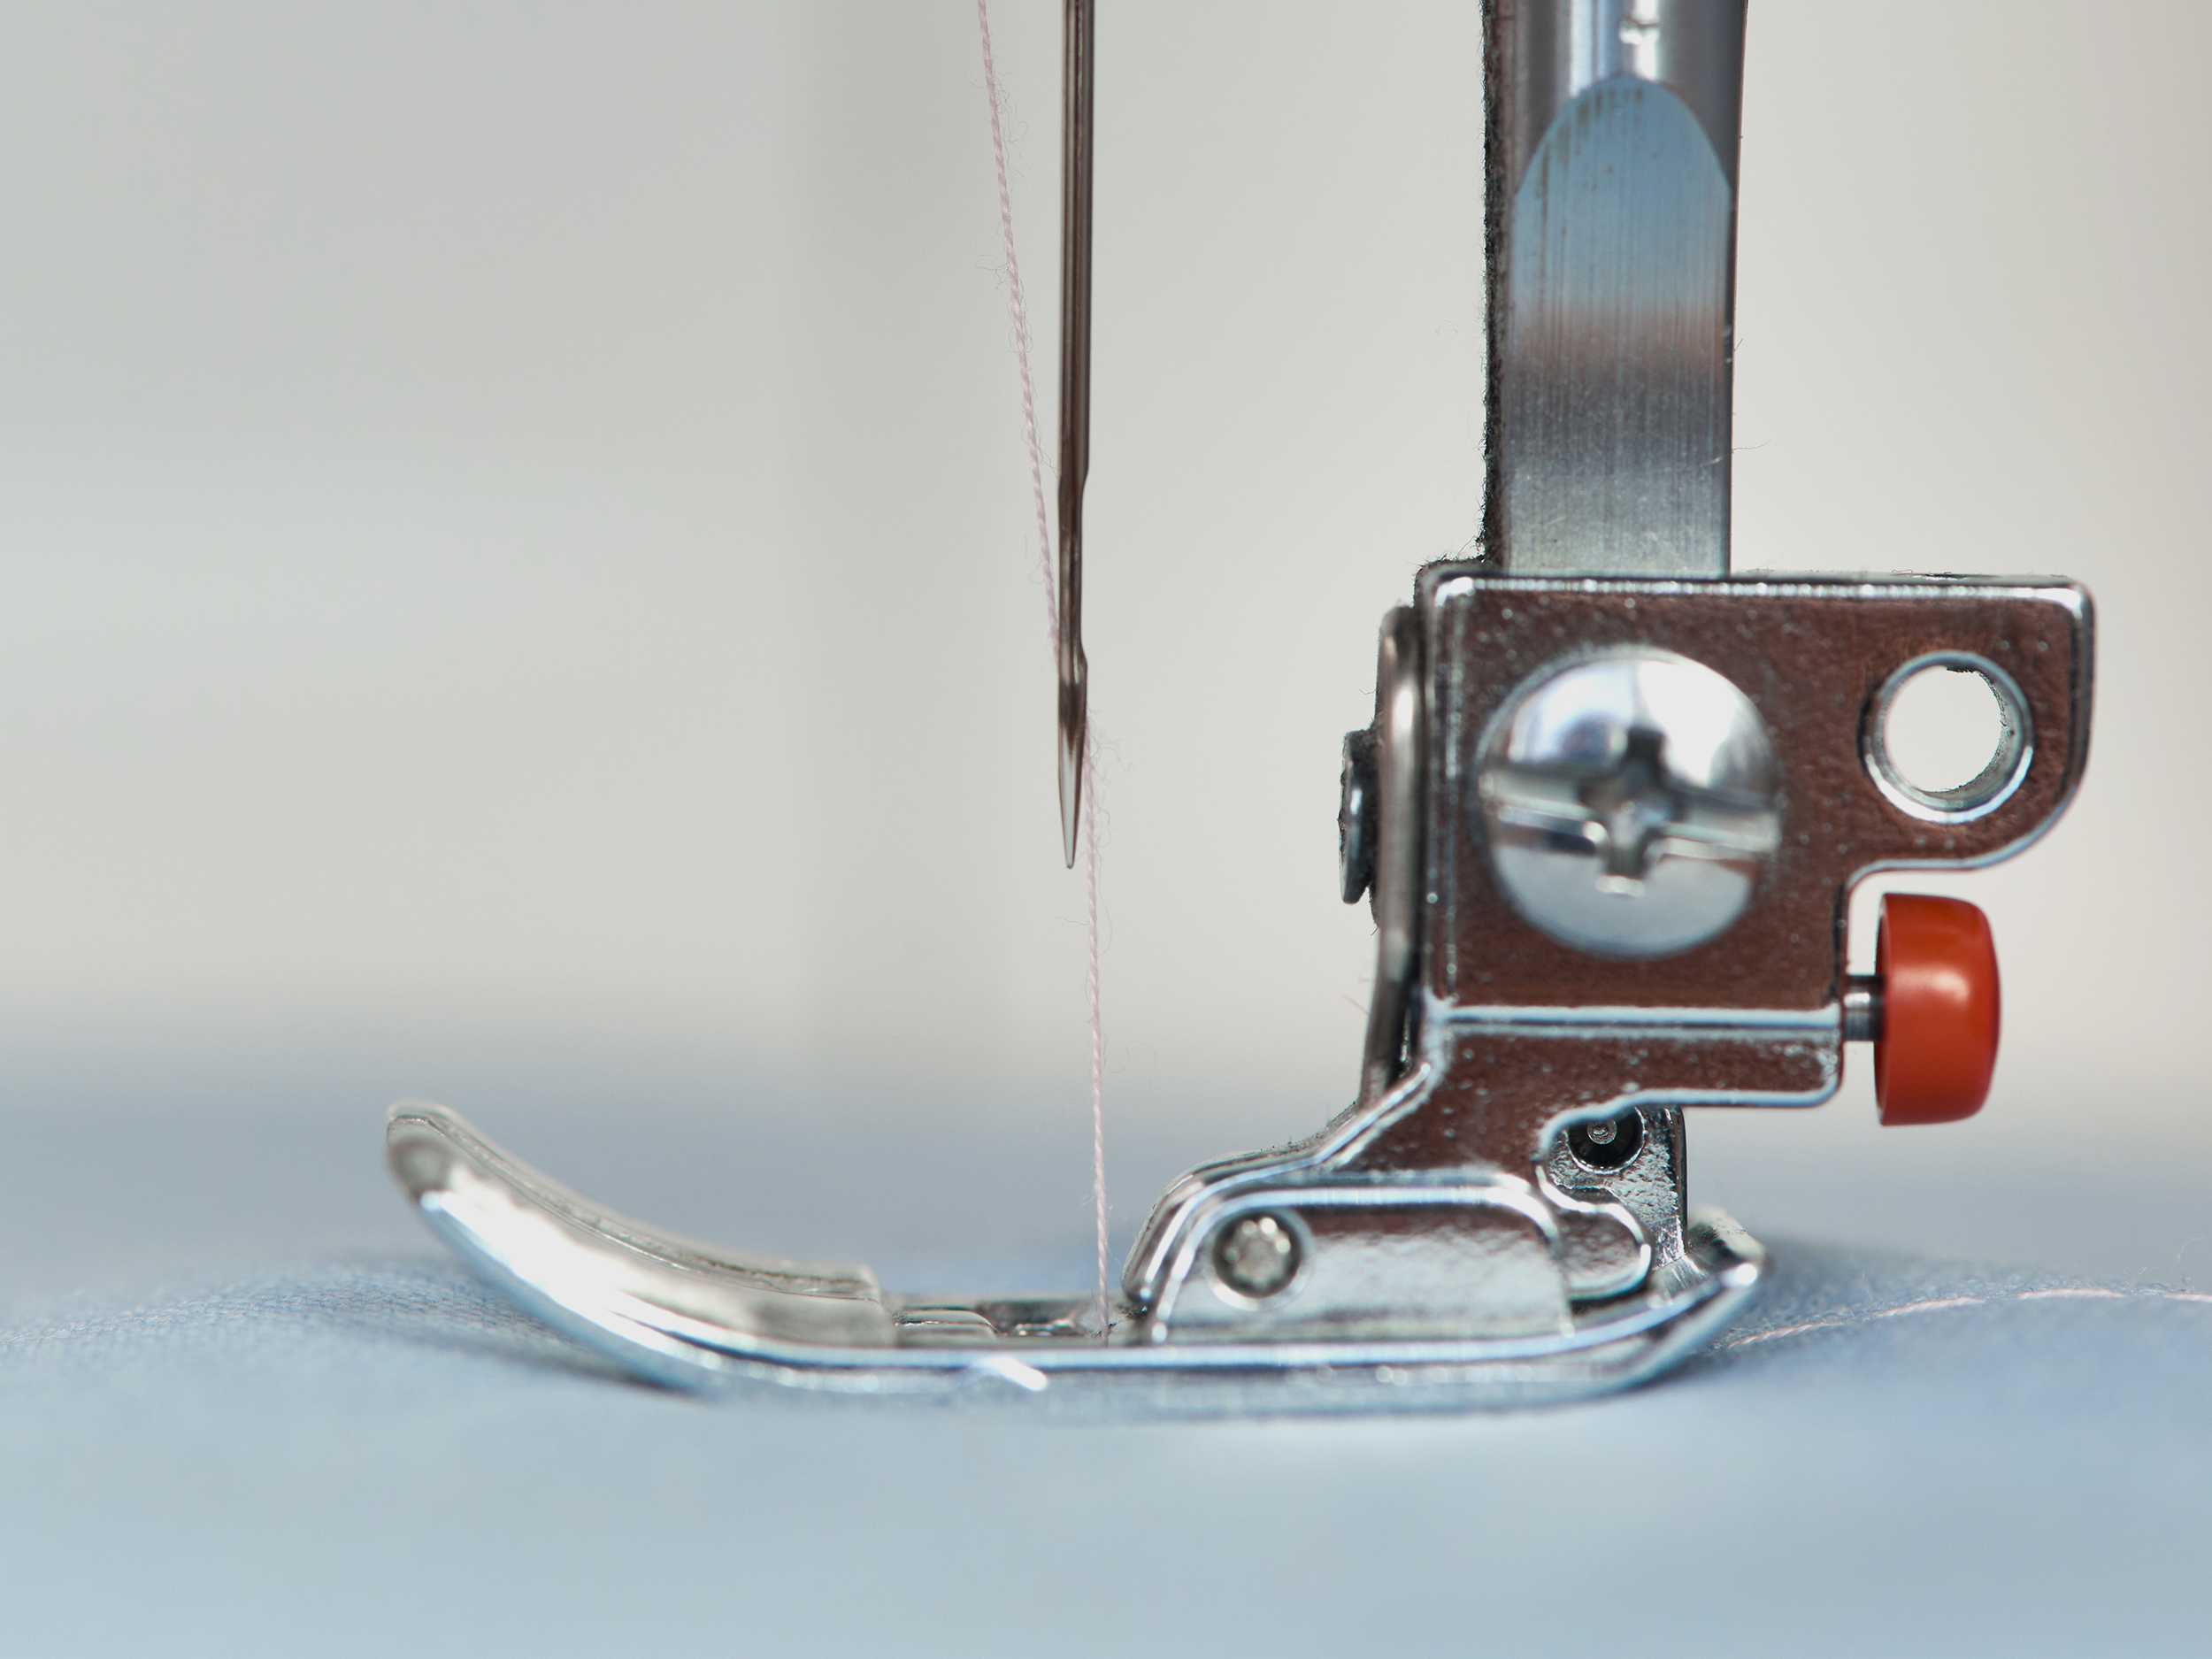 Close-up of a sewing machine